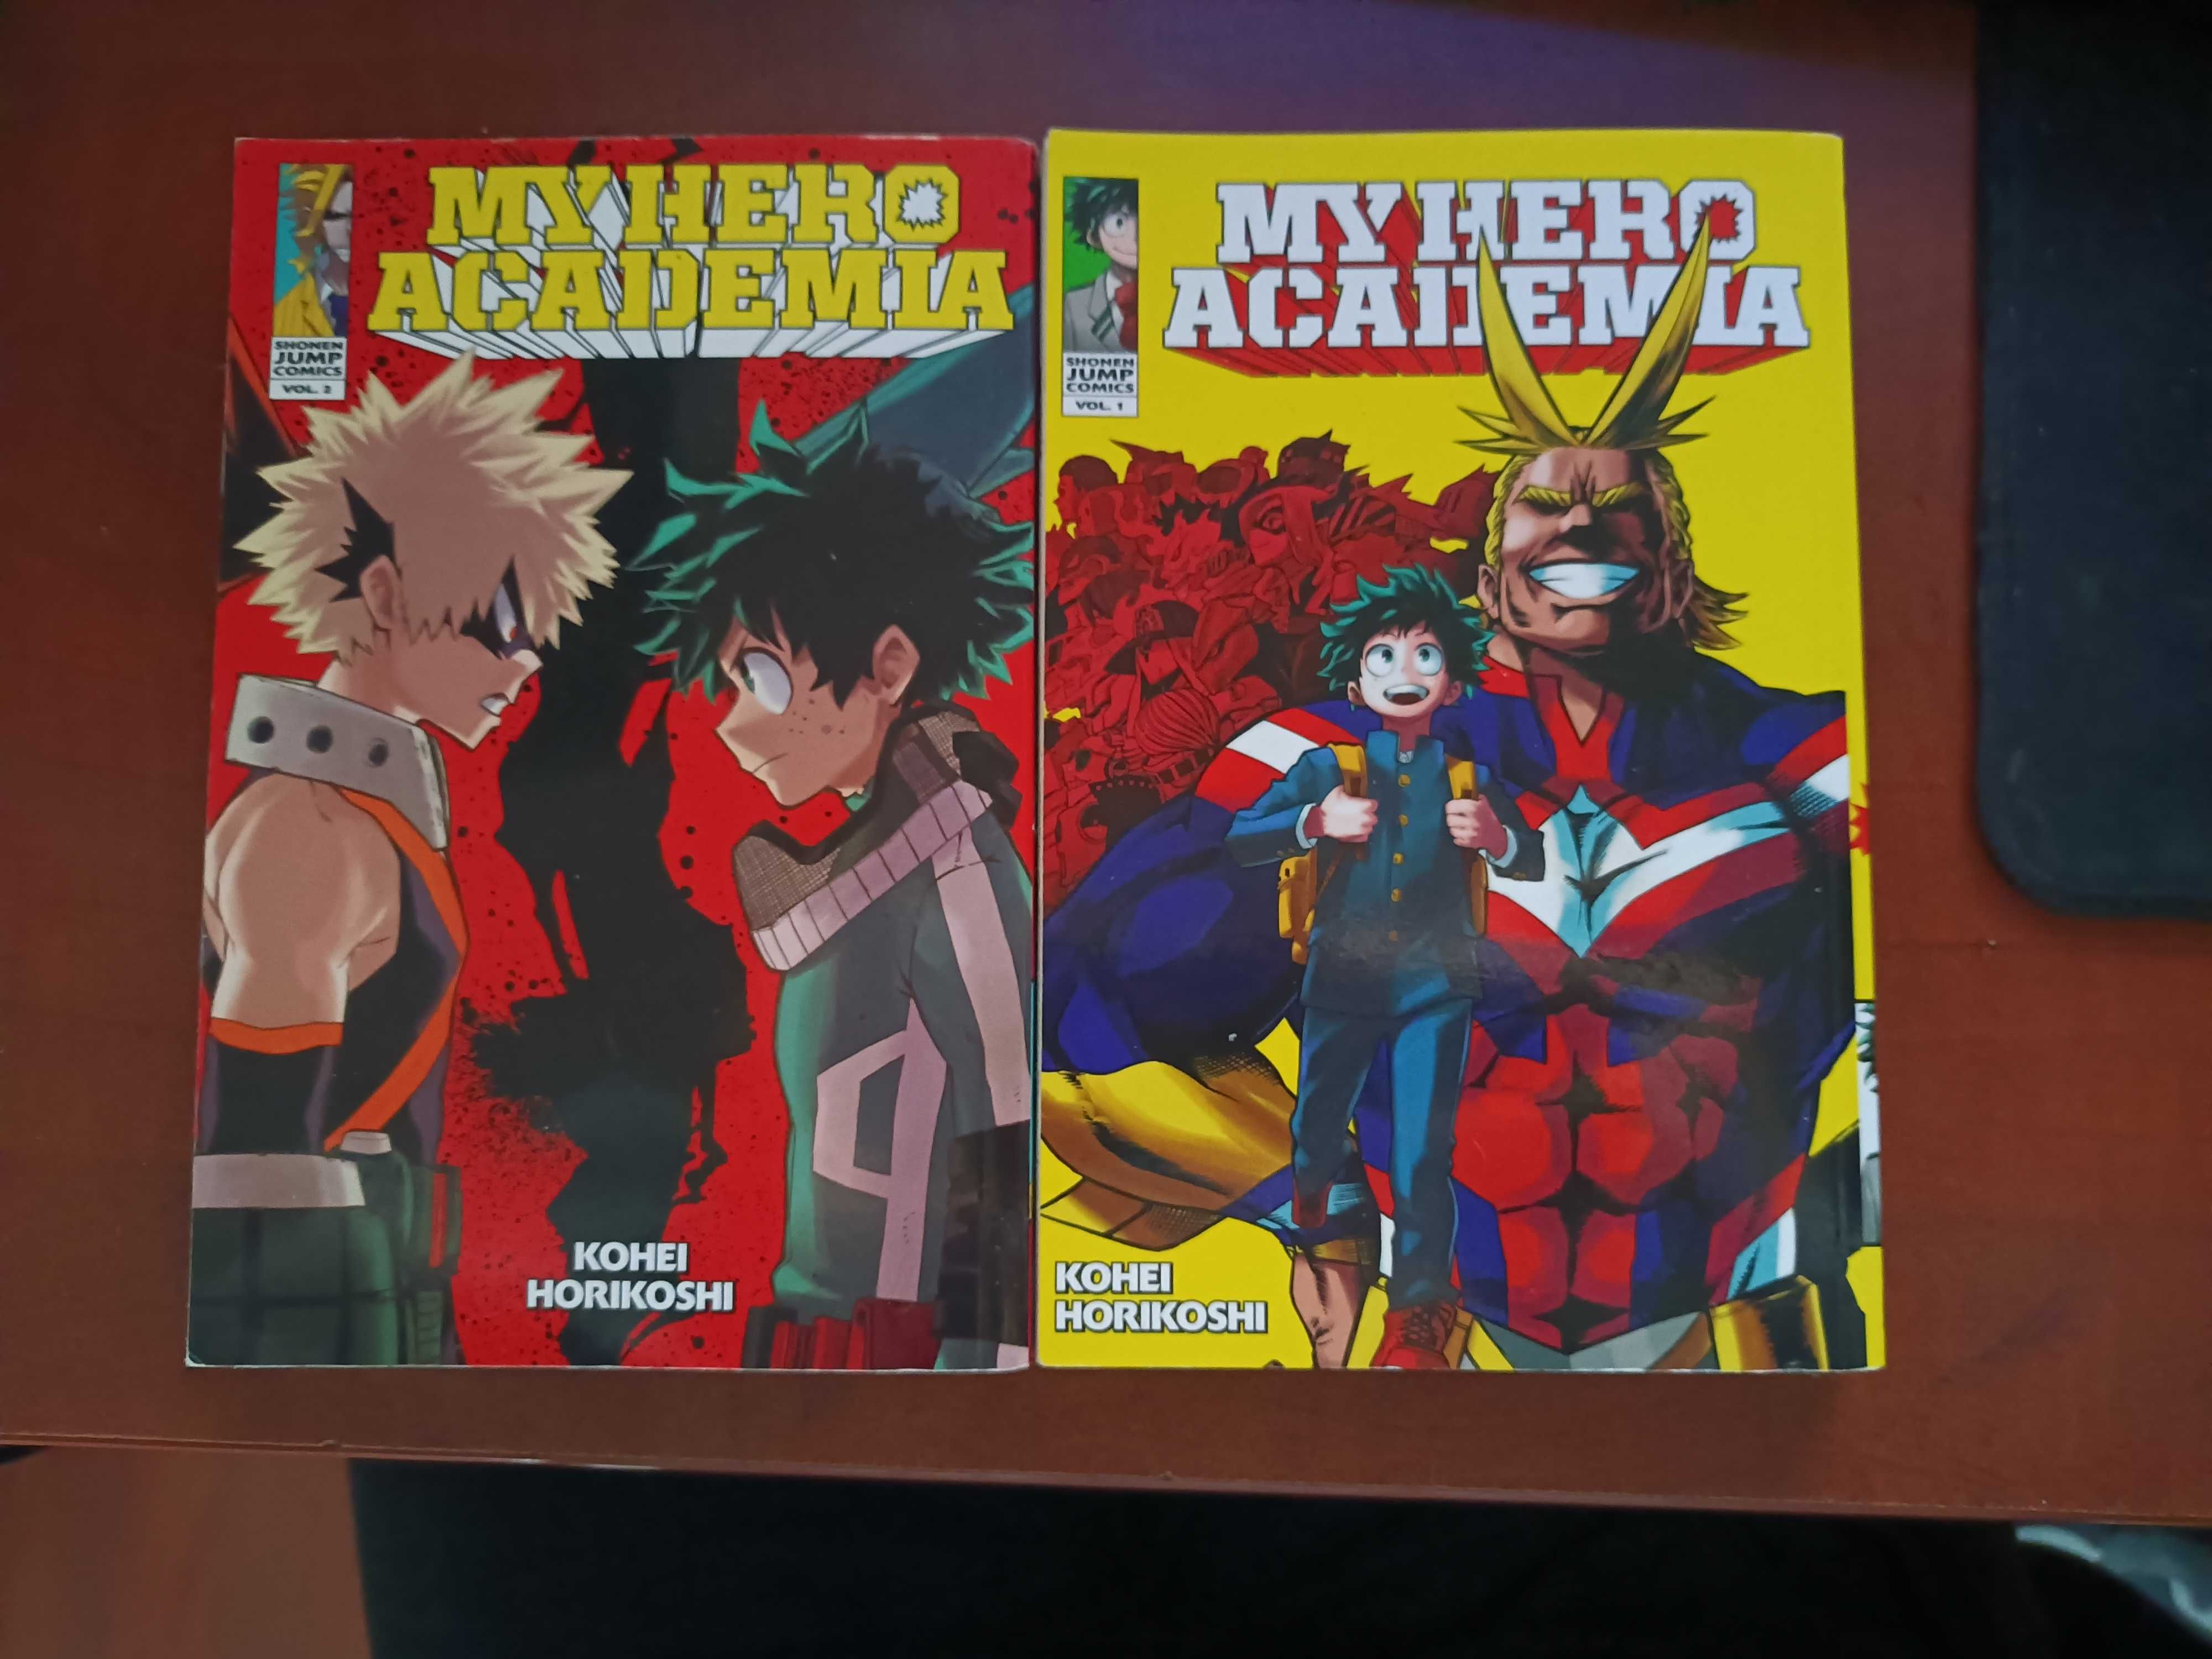 Manga: My Hero Academia